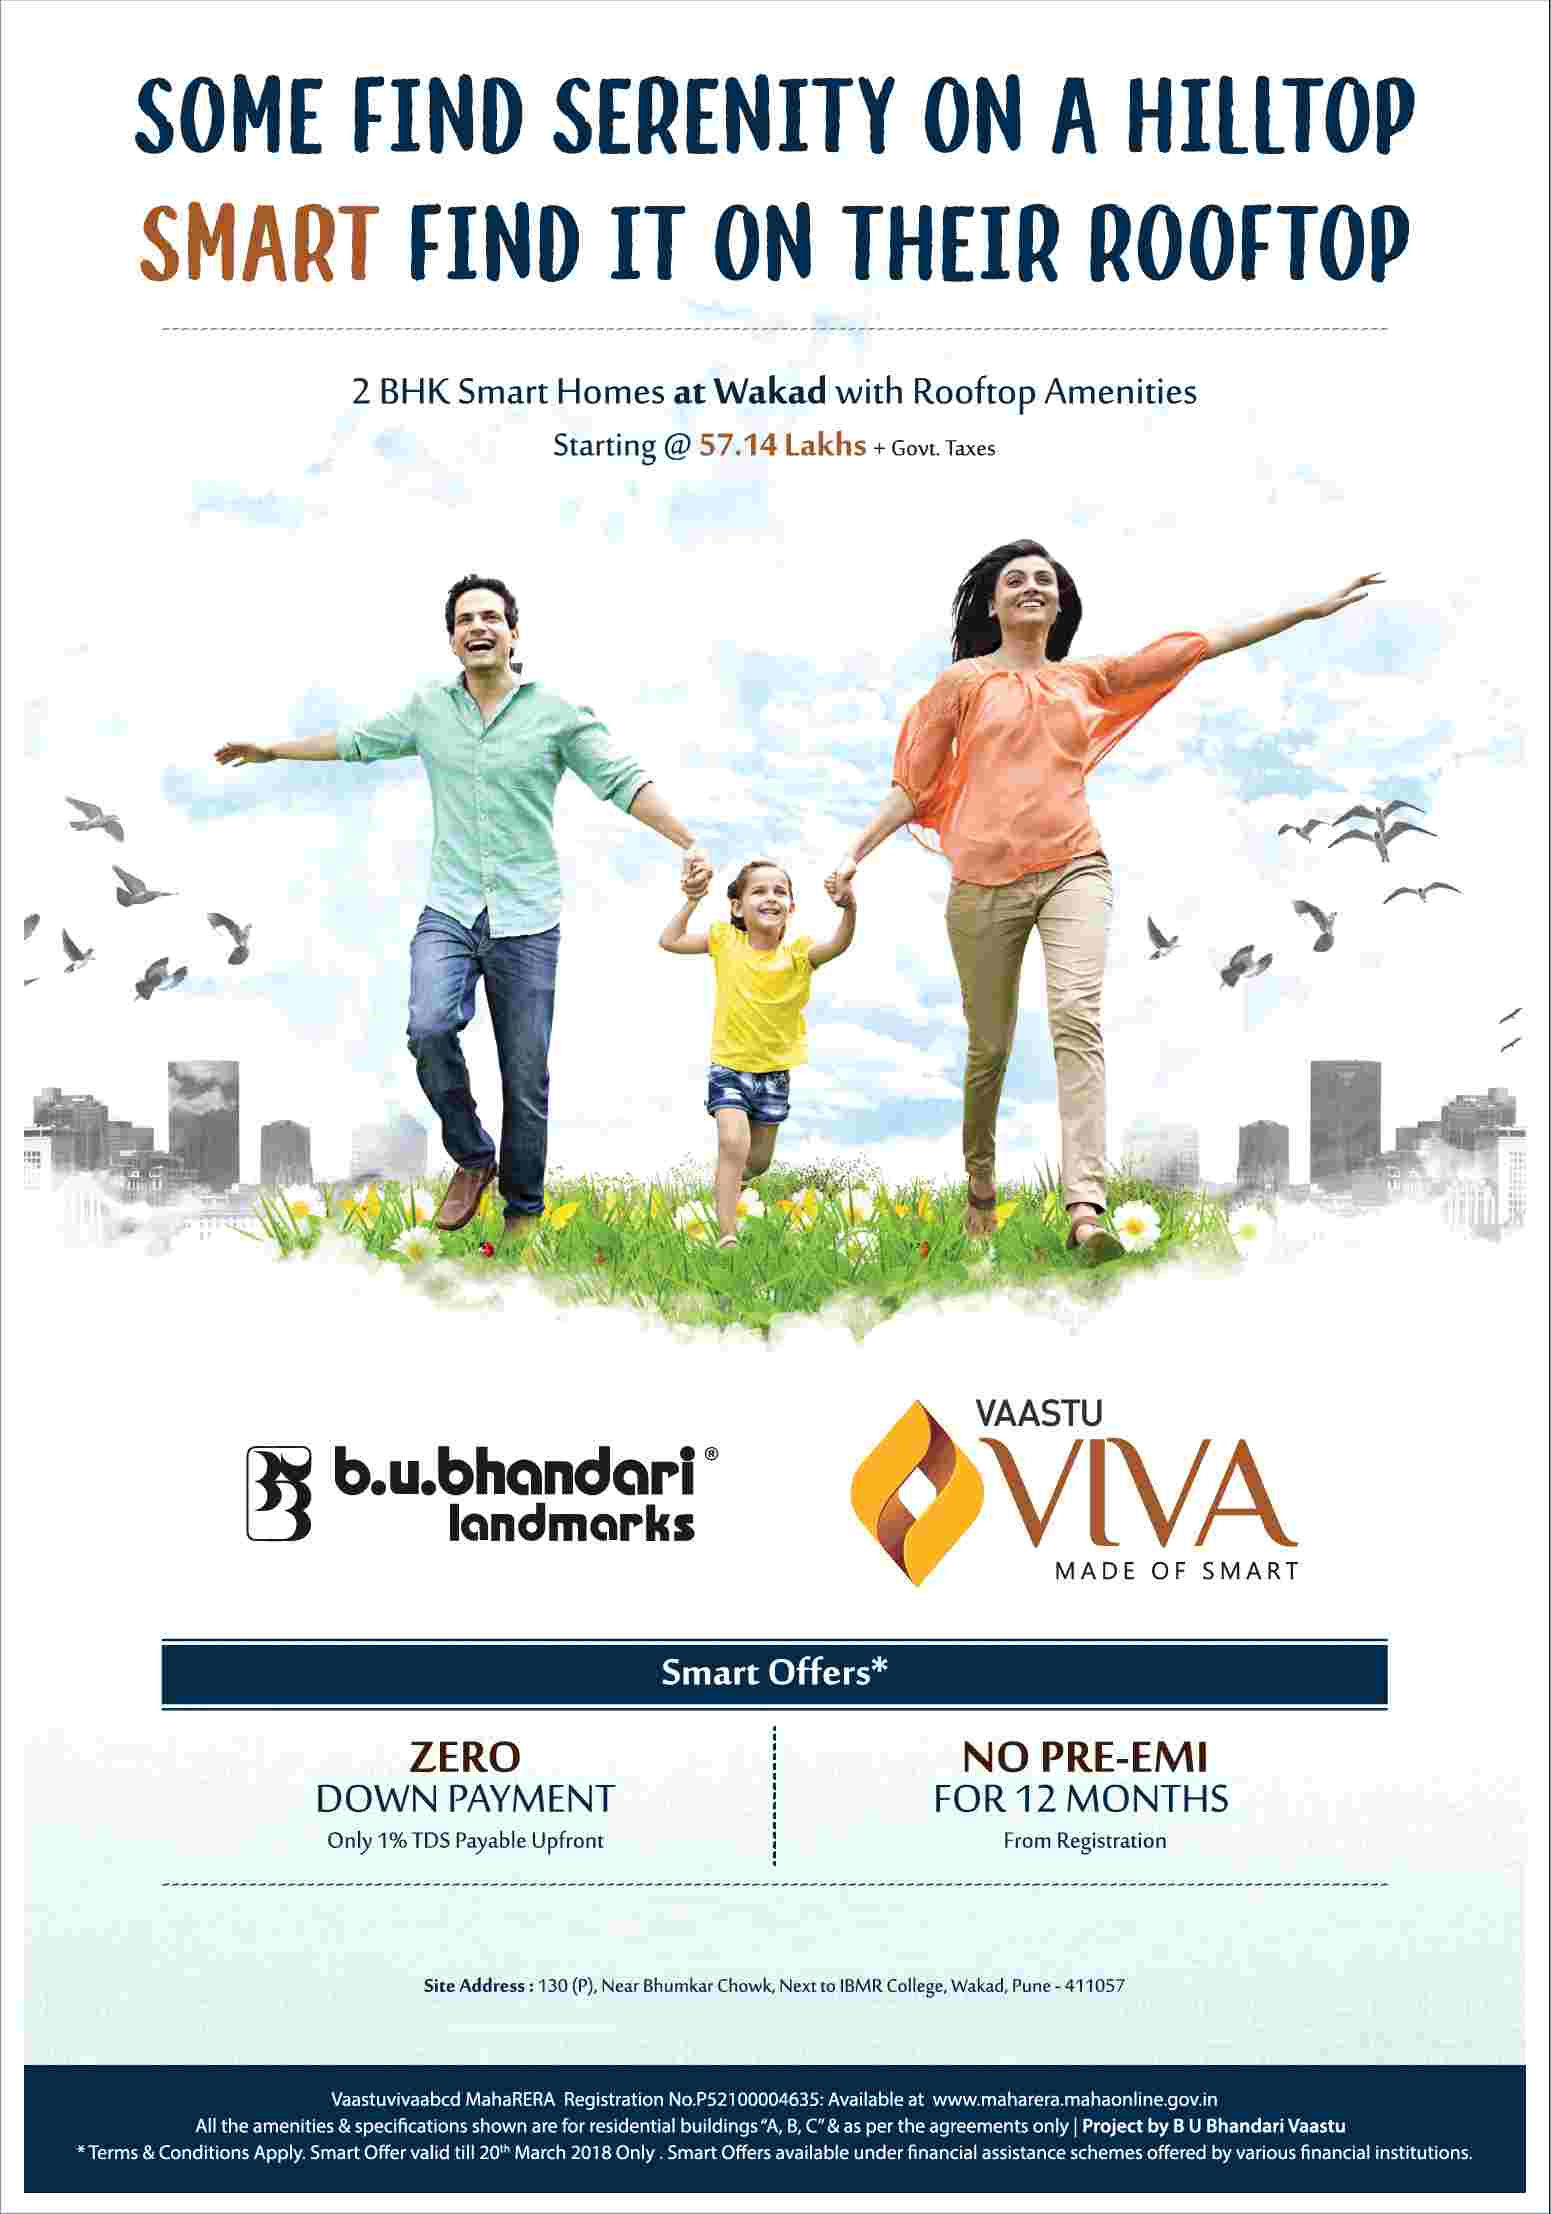 Pay no pre-EMI for 12 months from registration at Bhandari Vaastu Viva in Pune Update